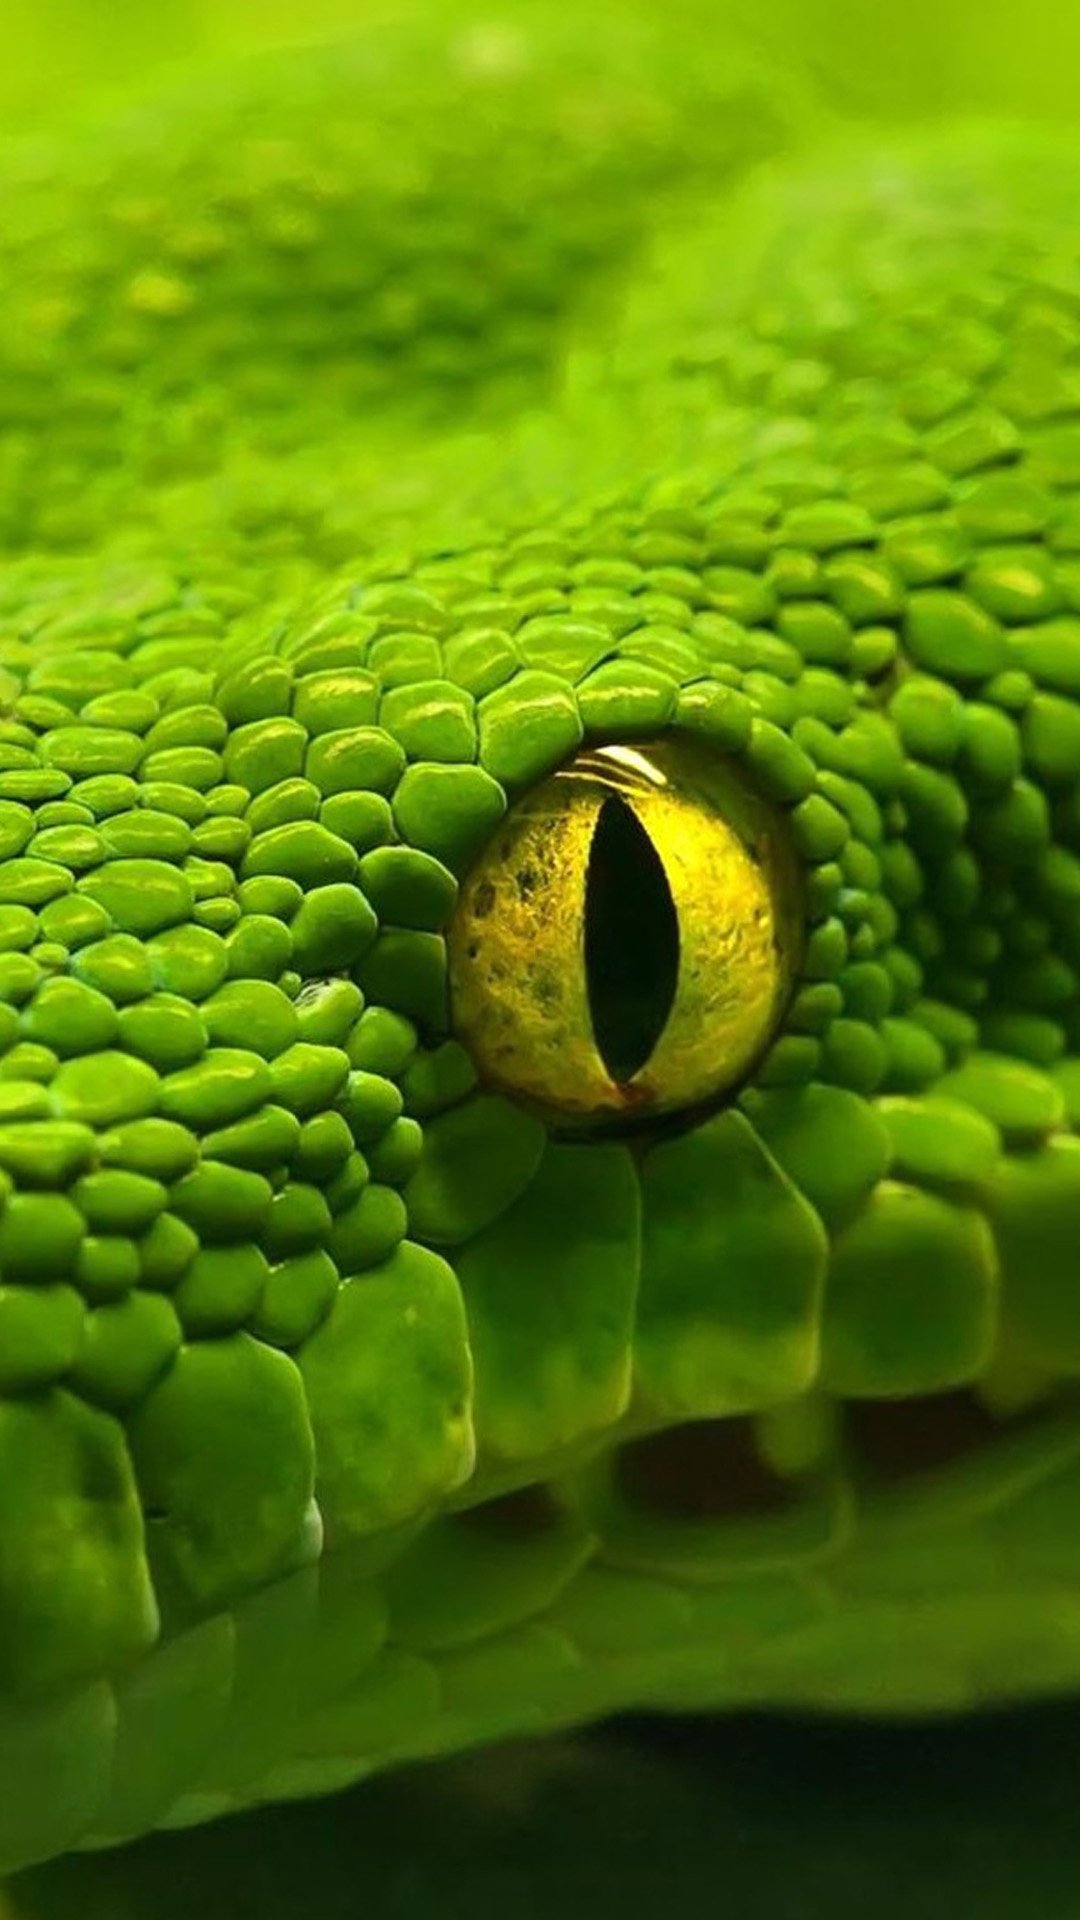 carta da parati in movimento,greensnake liscio,verde,rettile,serpente,serpente